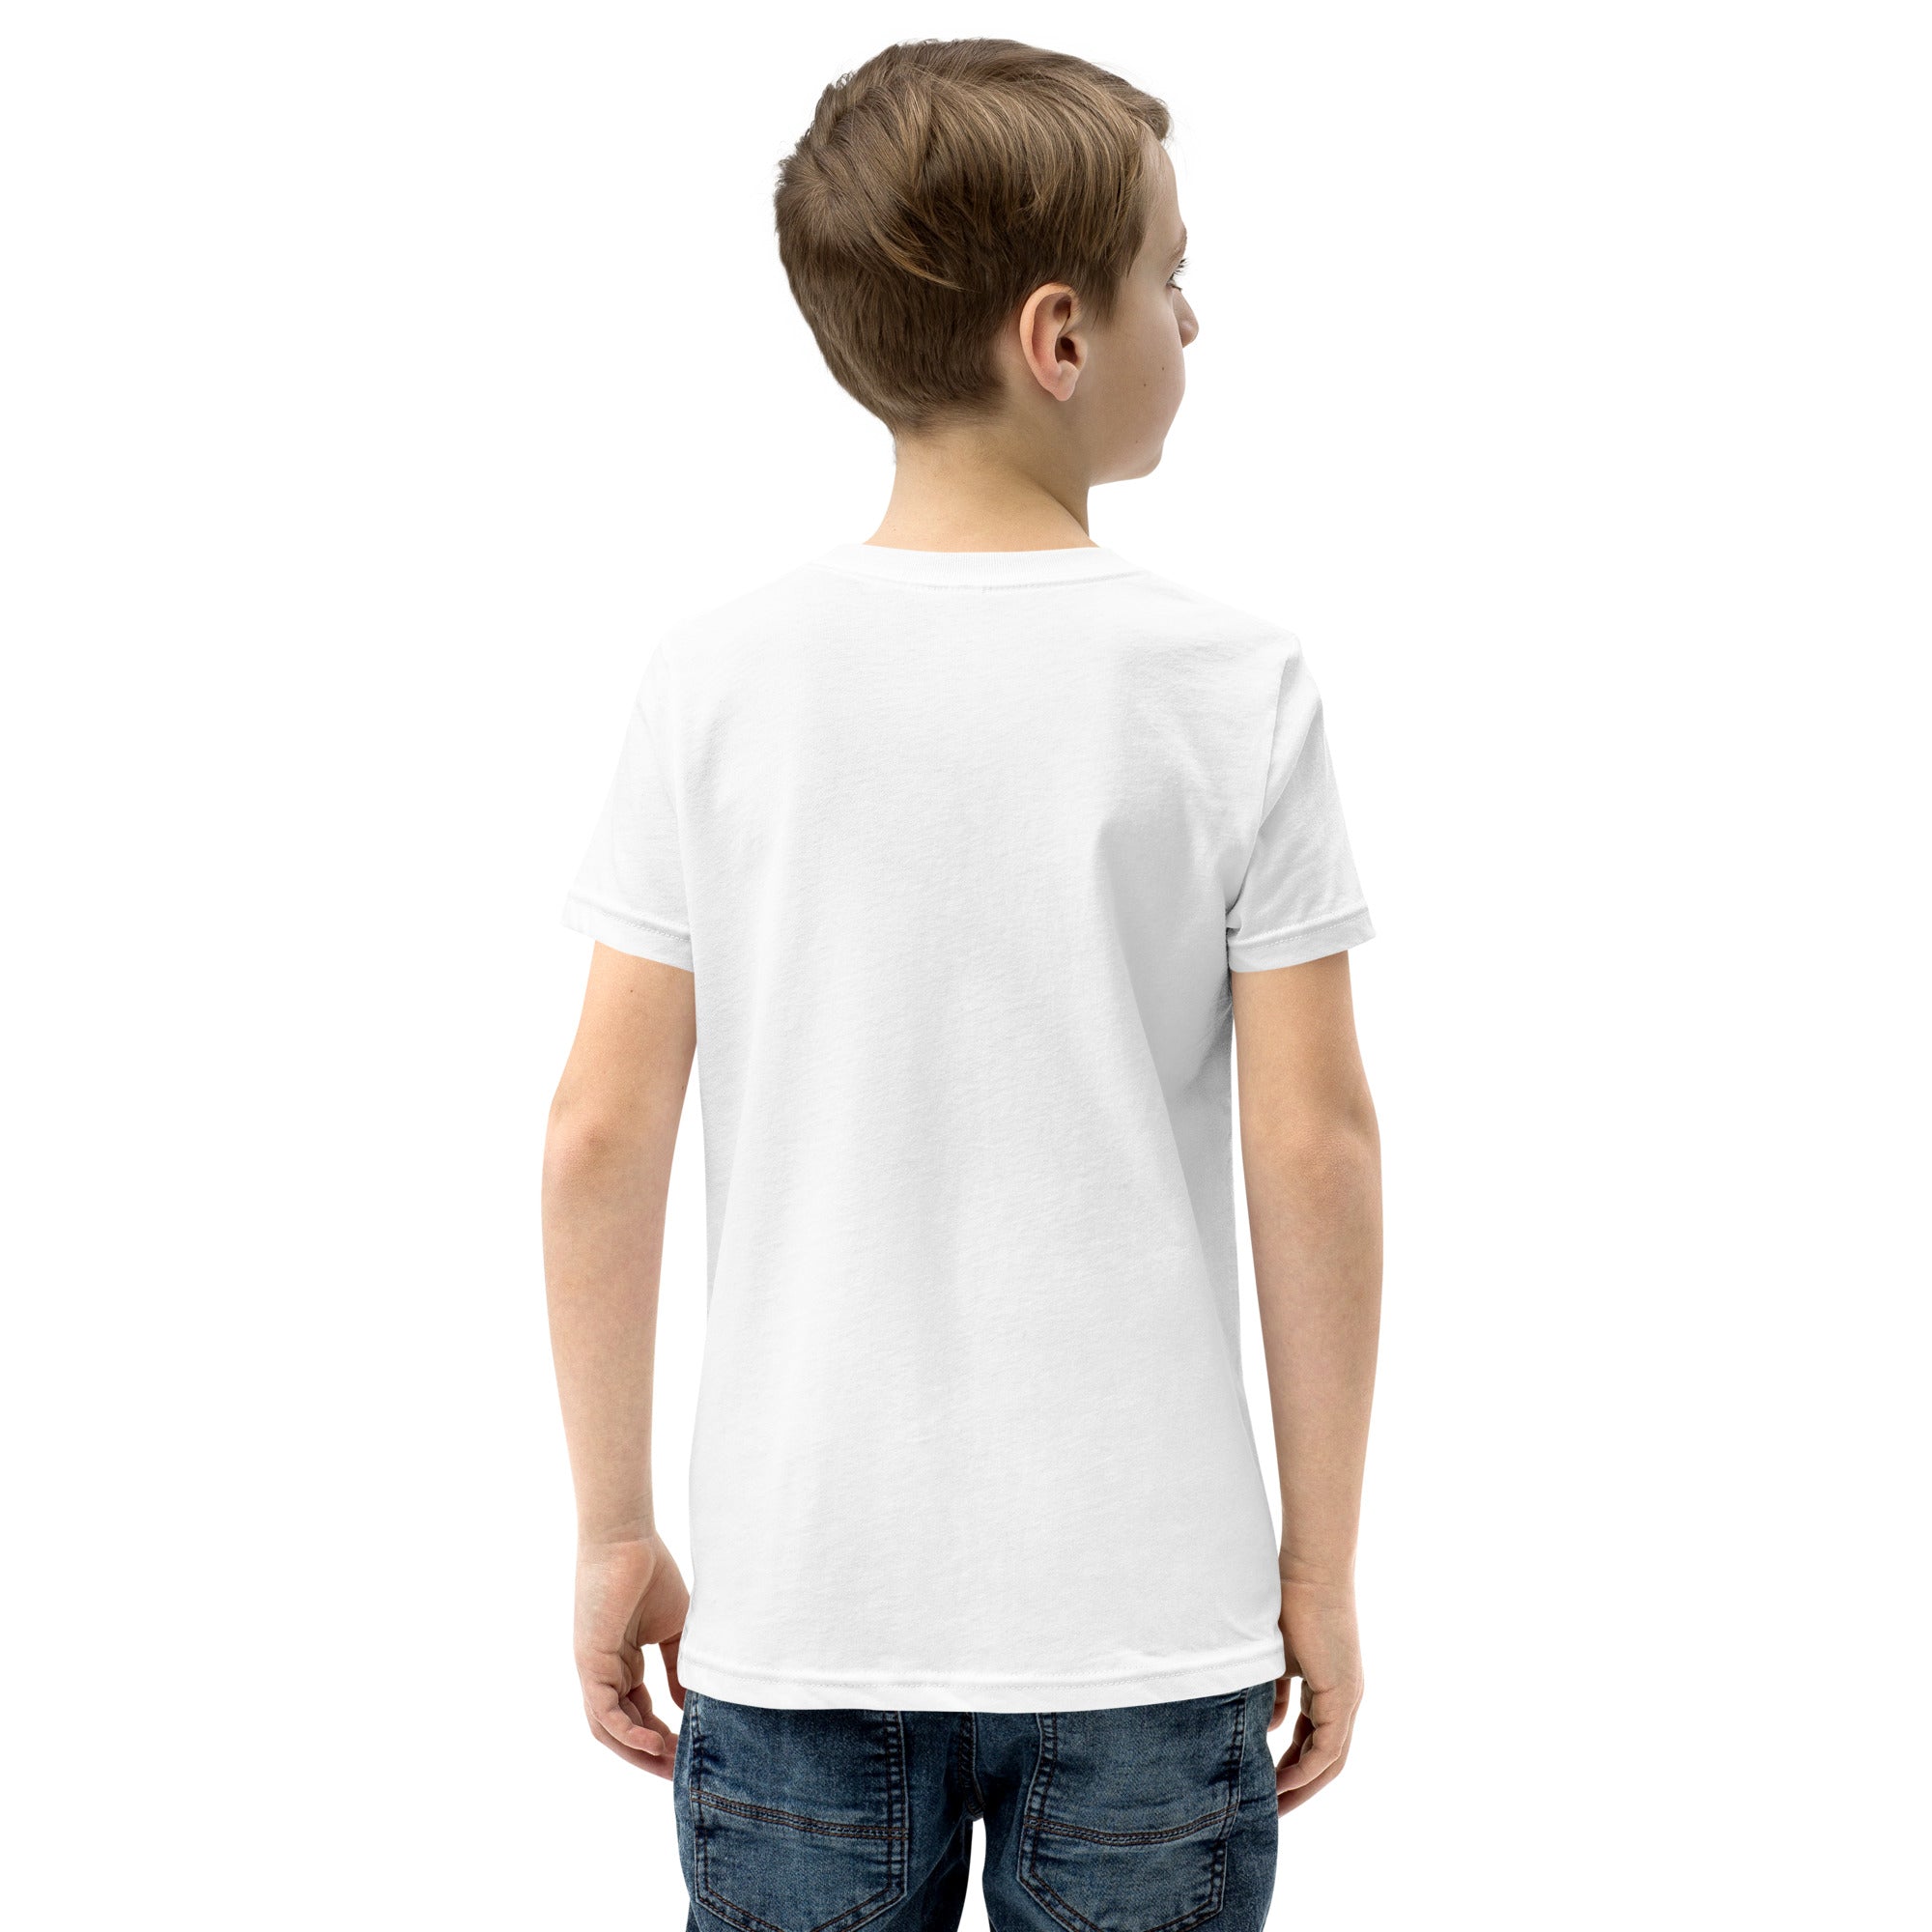 Buford Logo R/B - White Youth Short Sleeve T-Shirt